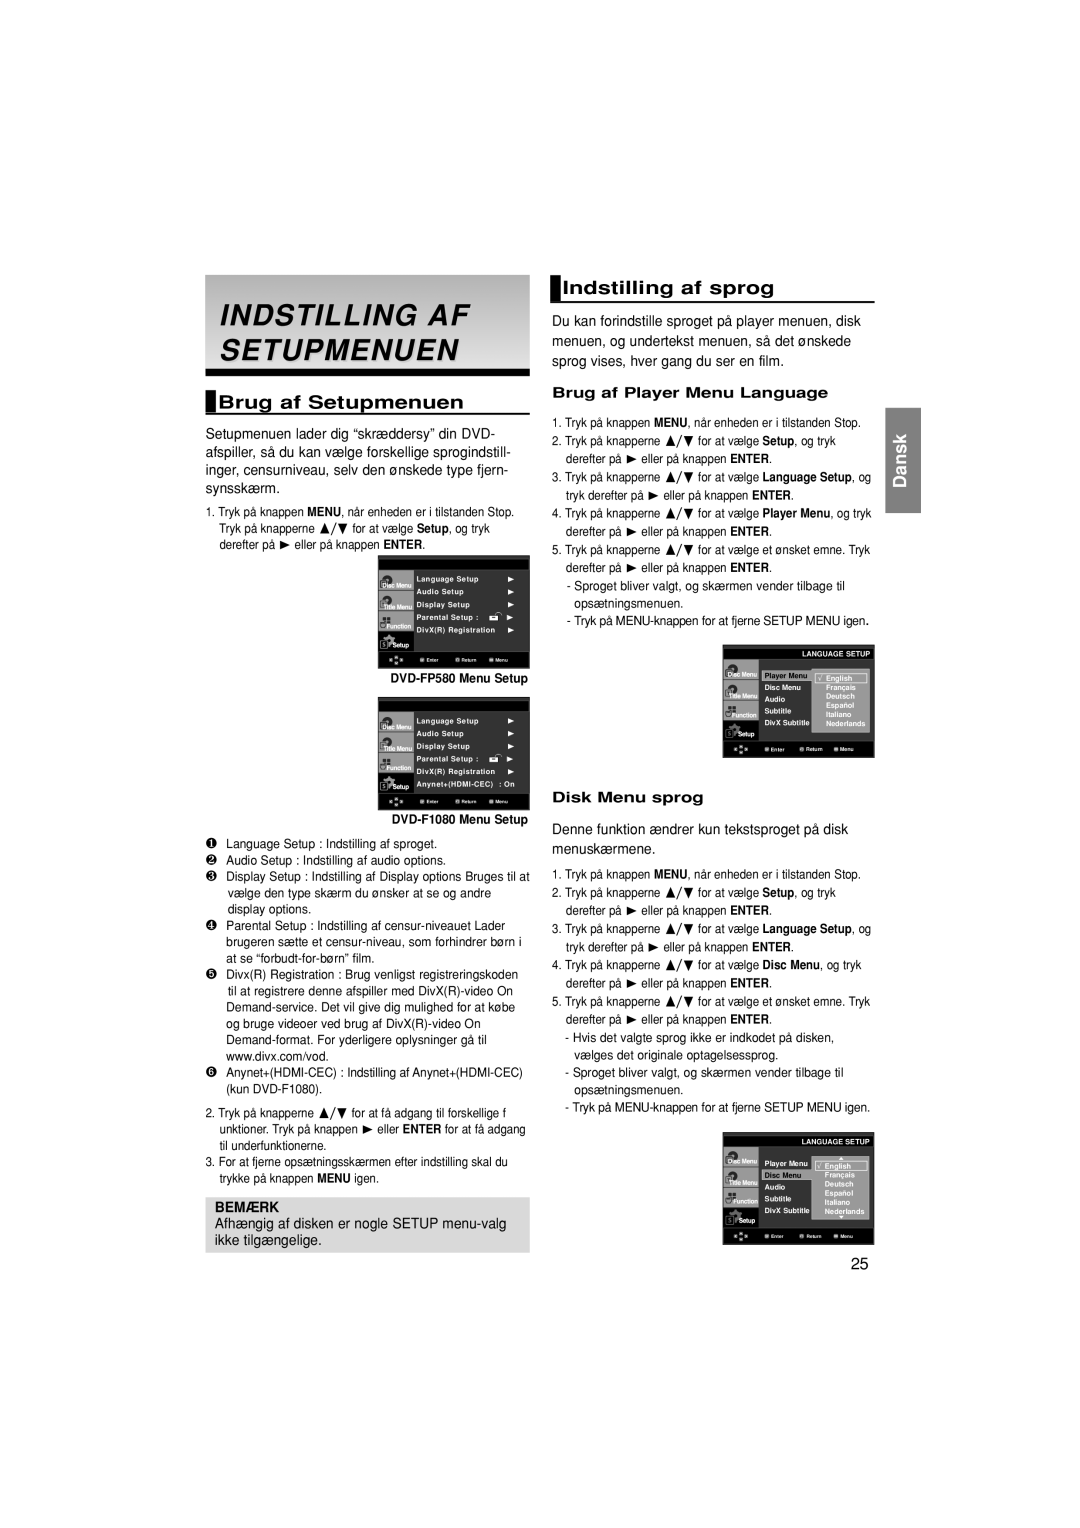 Samsung DVD-F1080W/XEE Indstilling AF Setupmenuen, Brug af Setupmenuen, Indstilling af sprog, Brug af Player Menu Language 